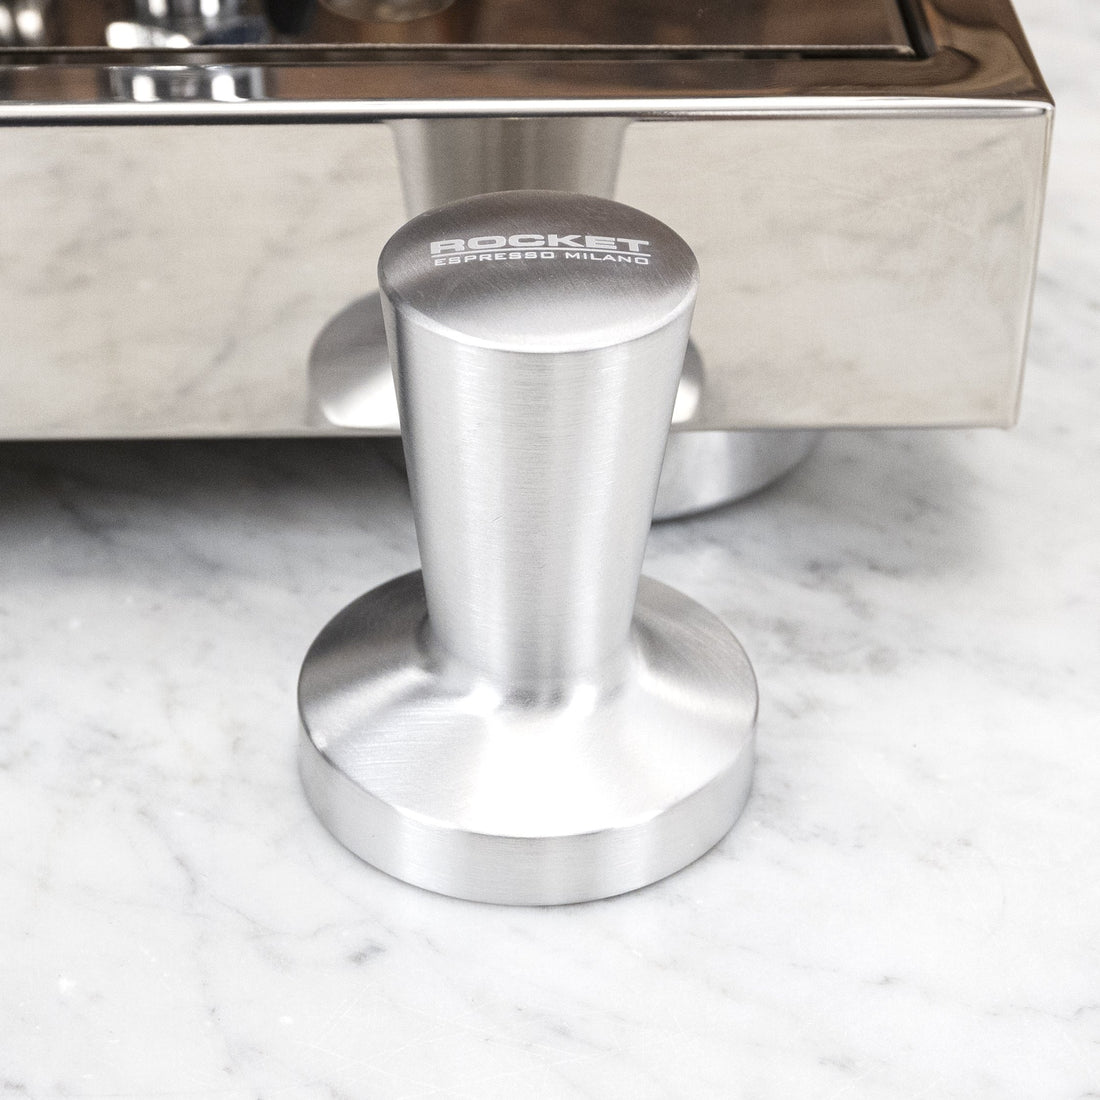 Rocket Espresso Appartamento Serie Nera Espresso Machine - Ruby